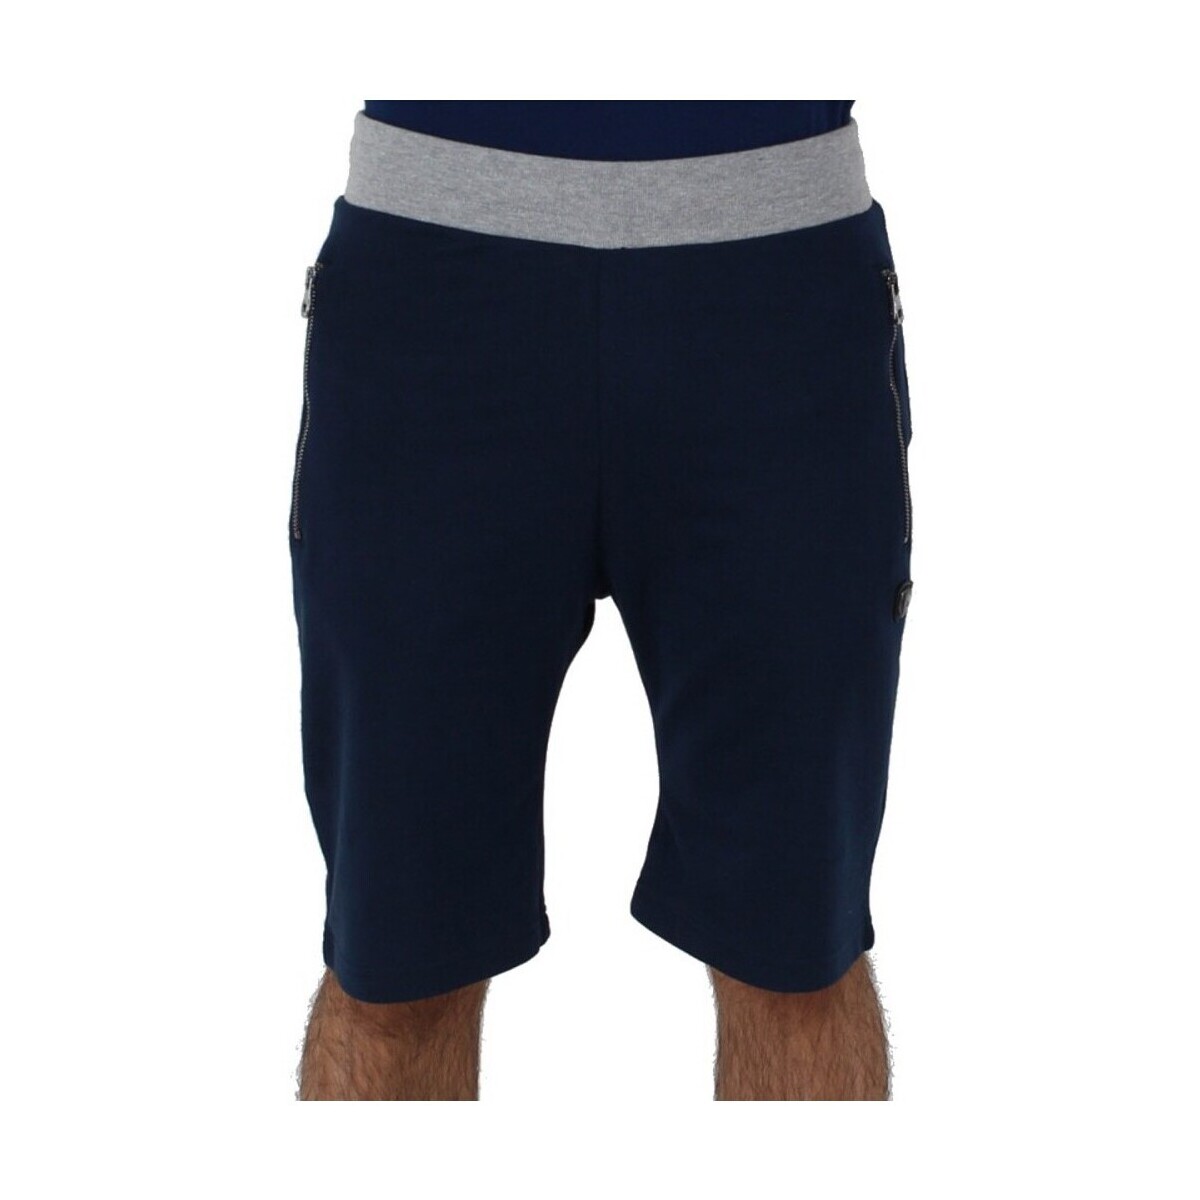 Vêtements Homme Shorts / Bermudas Redskins Bermuda  Tatum Bercy ref_ trk39103-marine- Bleu